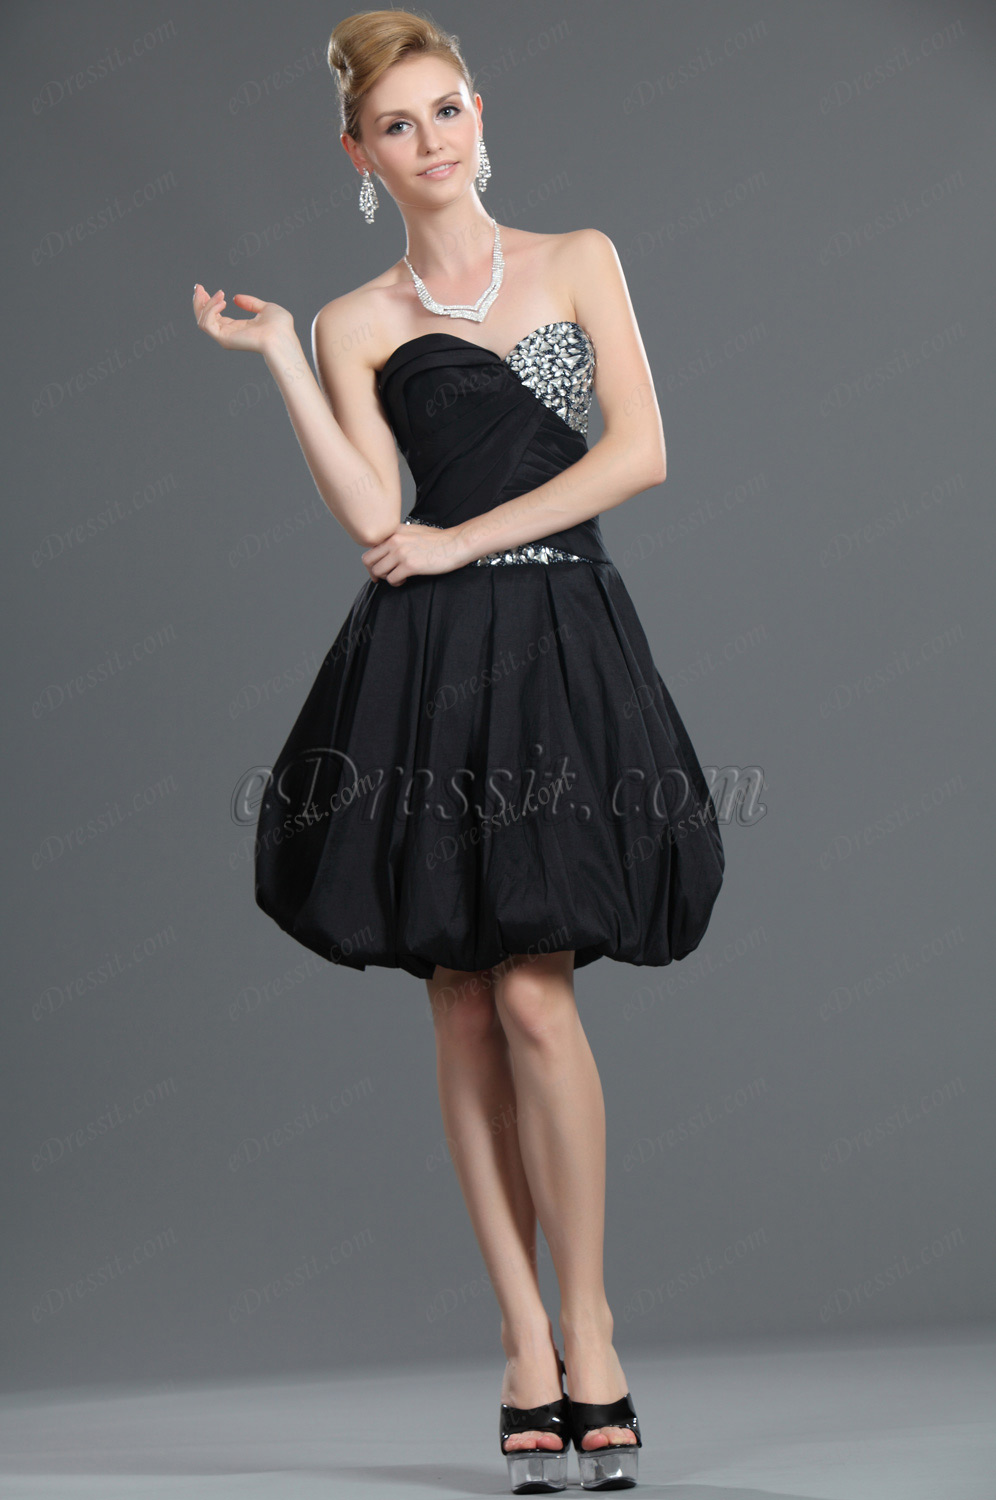 eDressit New Strapless Beaded Black Party Dress Bubble Dress (35110800)